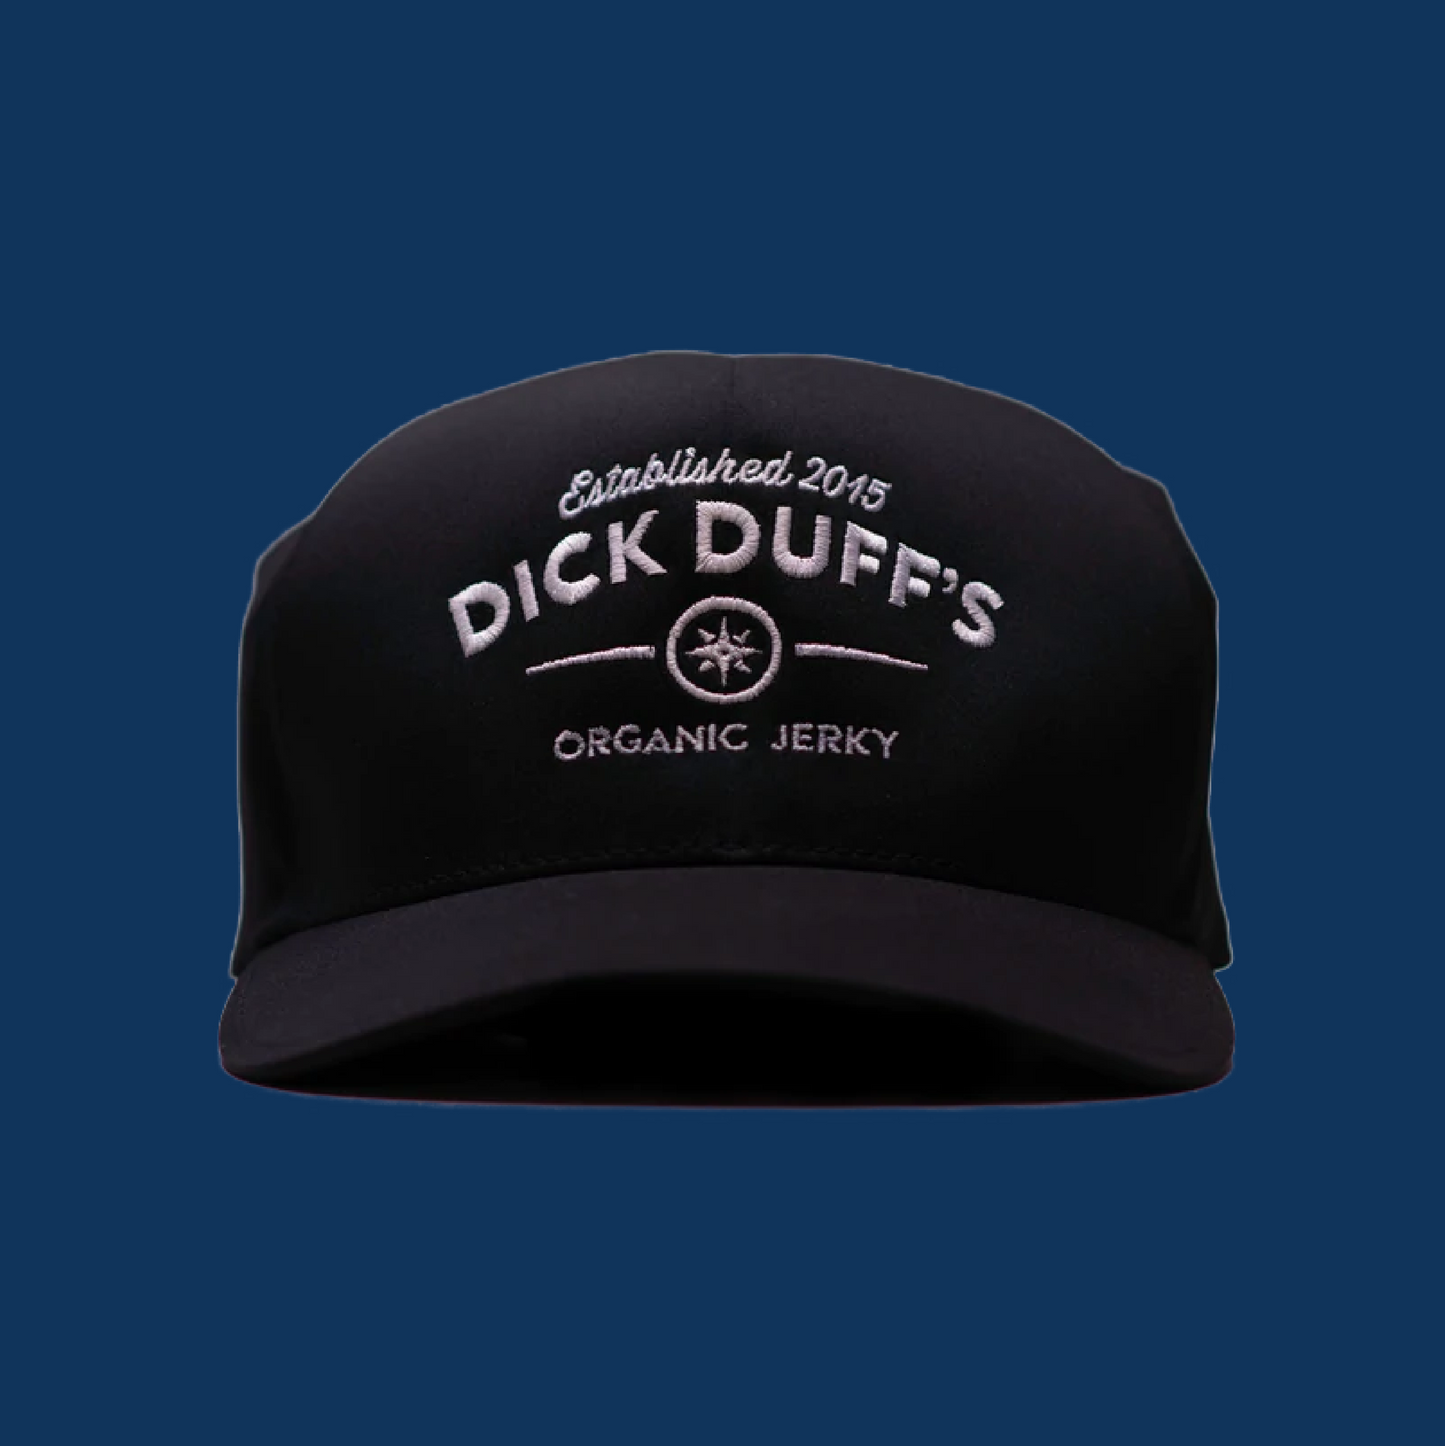 Dick Duff's Organic Jerky Hat